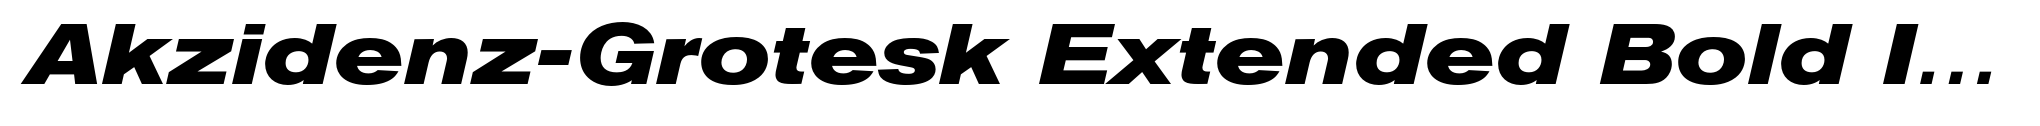 Akzidenz-Grotesk Extended Bold Italic image